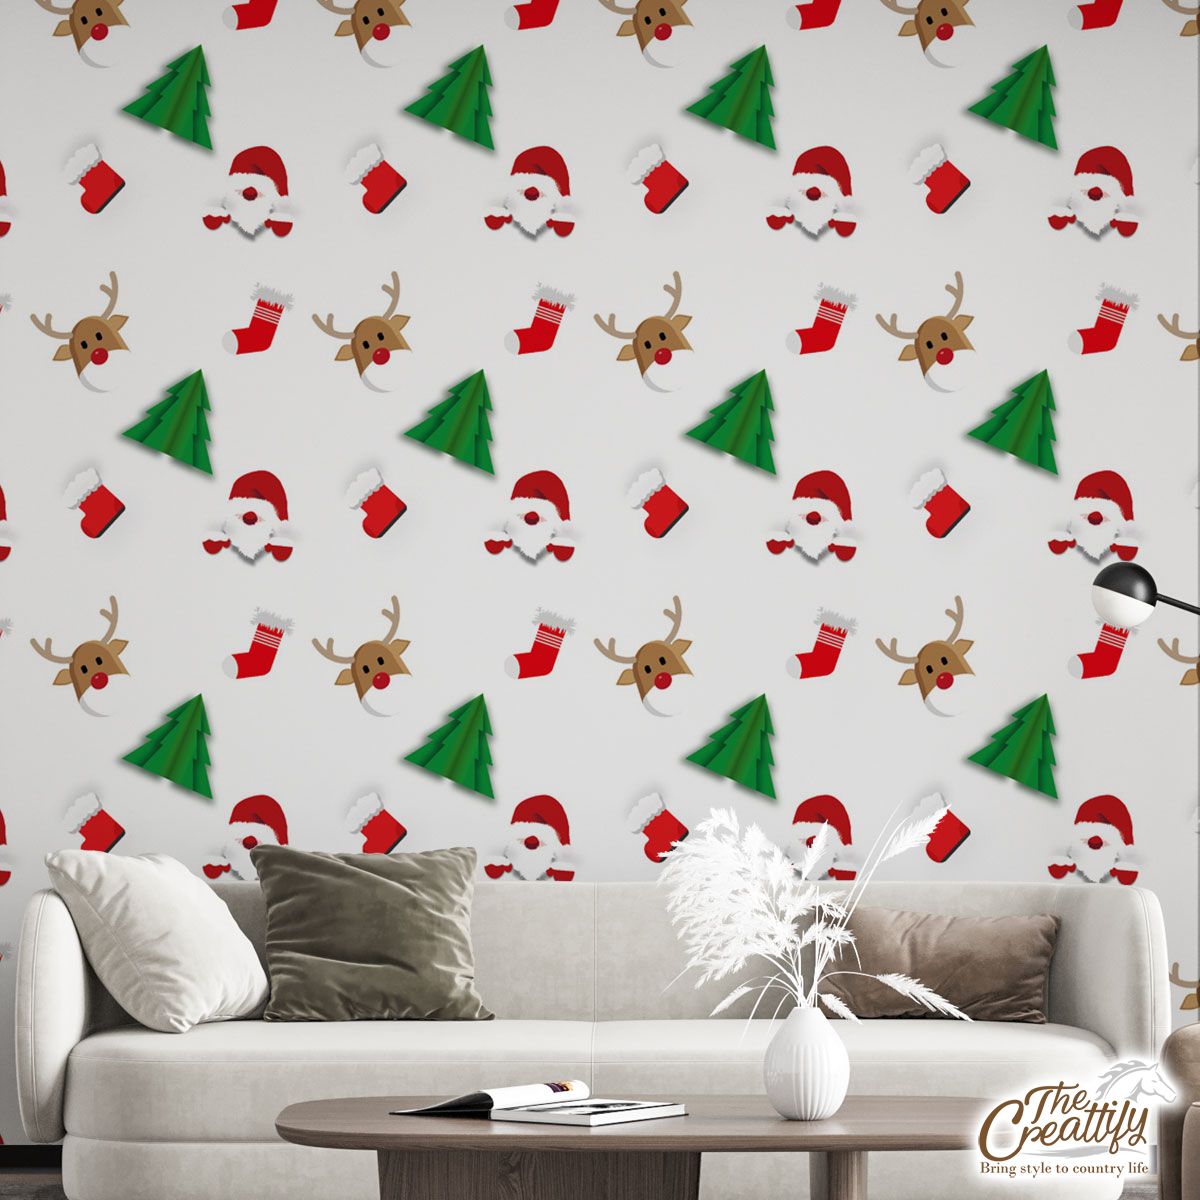 Santa Claus, Pine Tree Silhouette, Christmas Reindeer And Red Socks Seamless Pattern Wall Mural